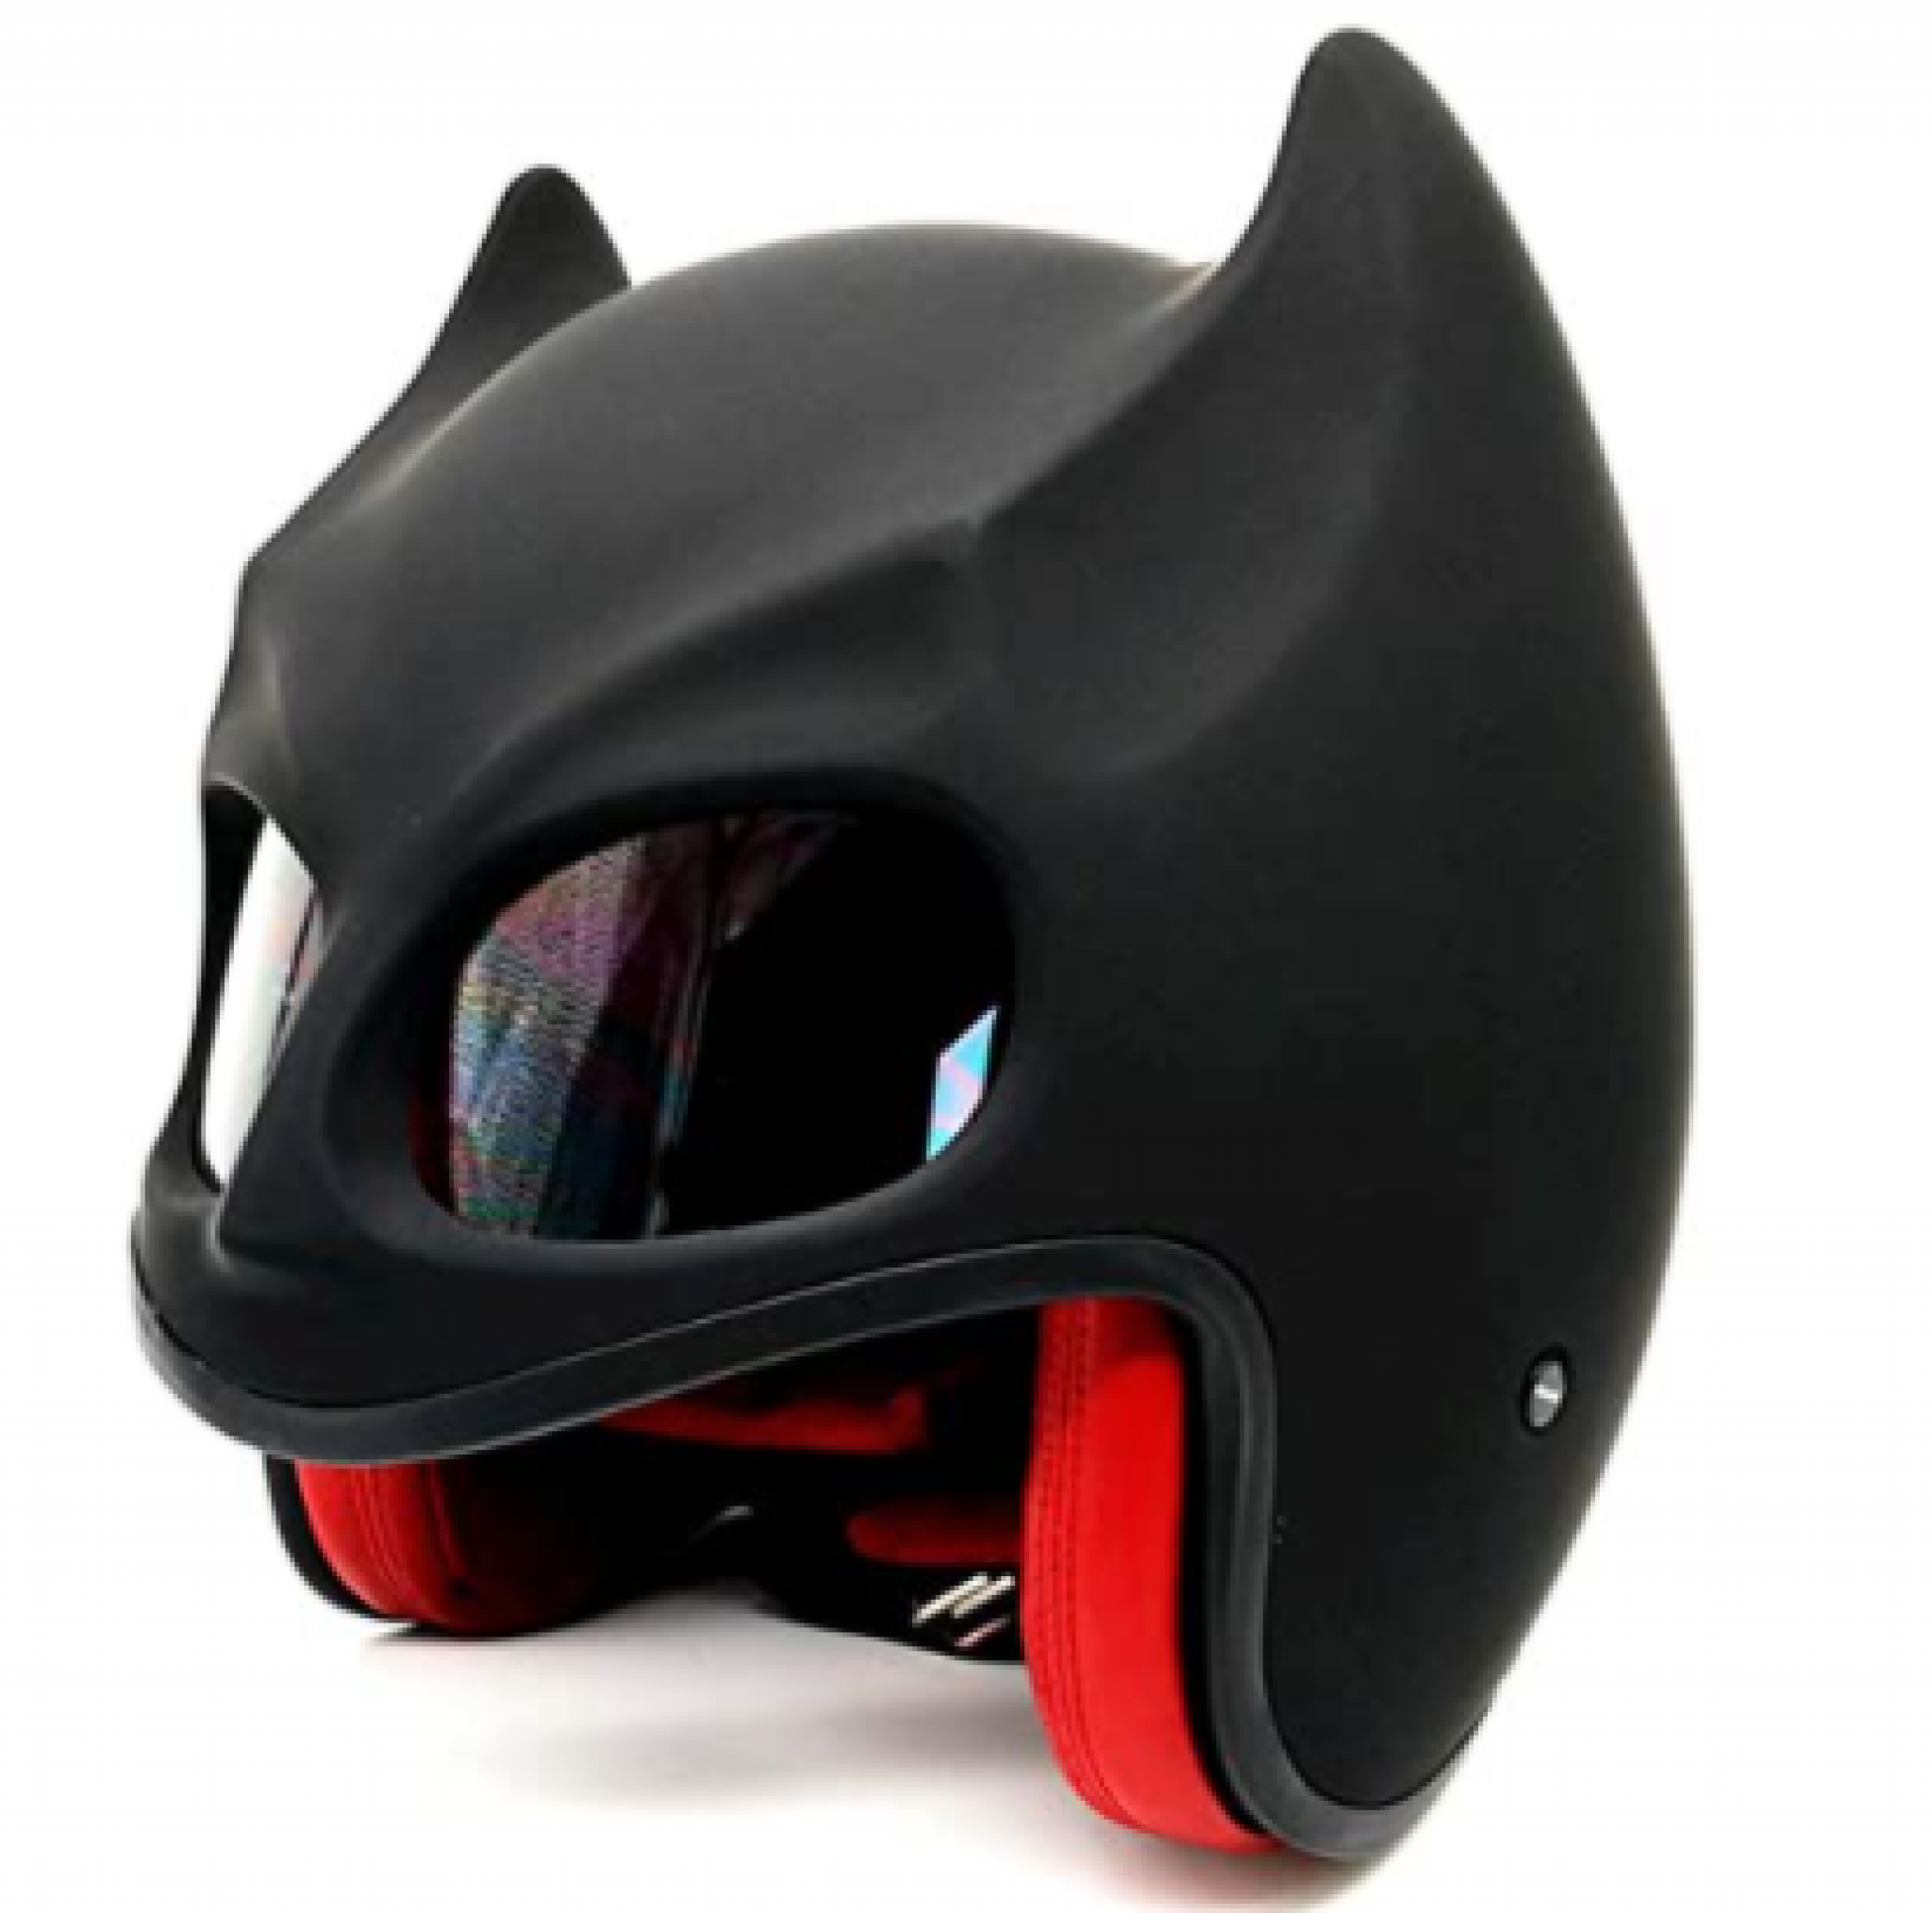 Batman Motorcycle Helmet - AbsorbTheWeb